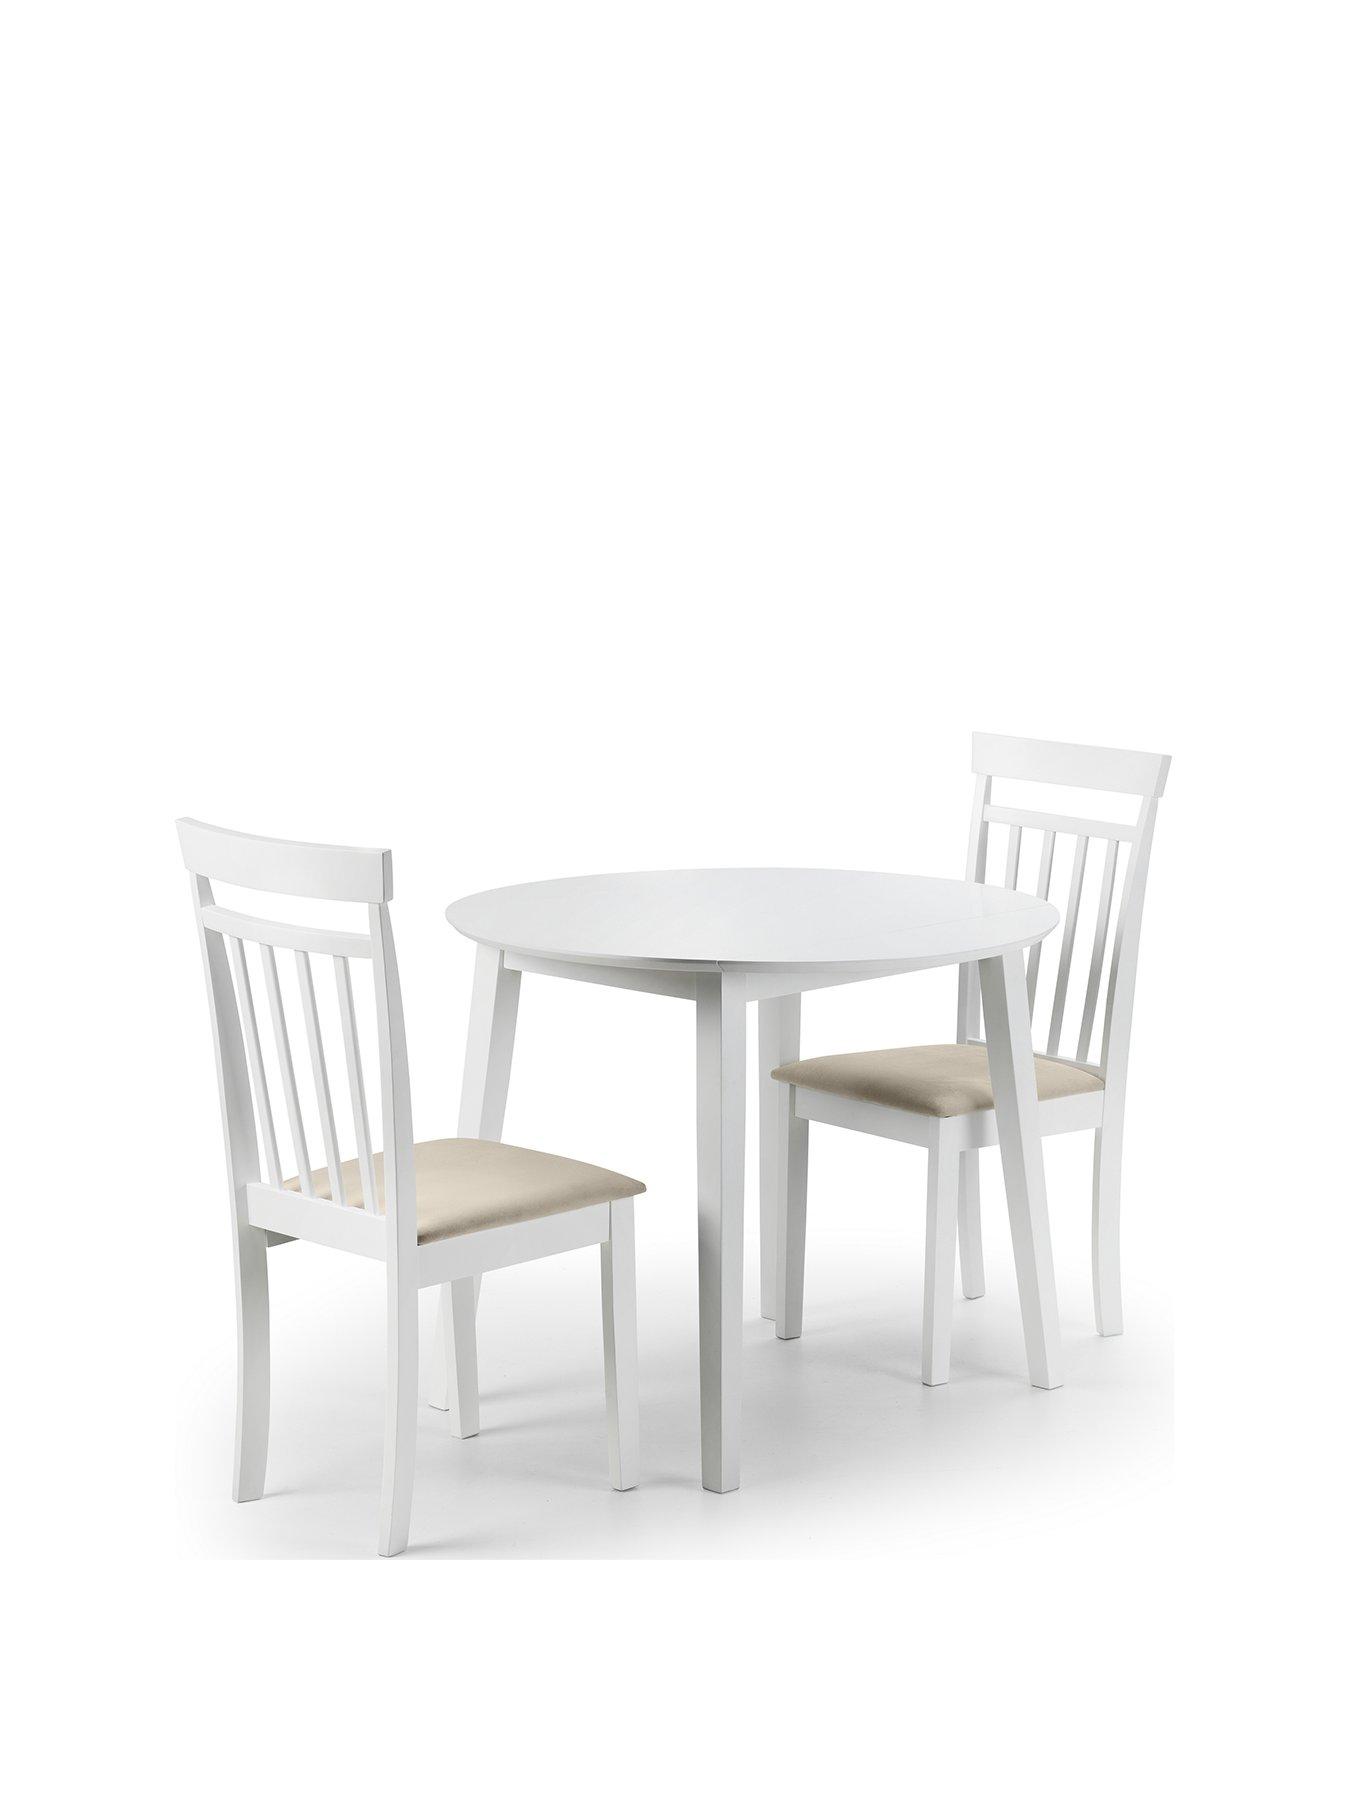 Julian Bowen Coast 90 Cm Drop Leaf Dining Table + 2 Chairs